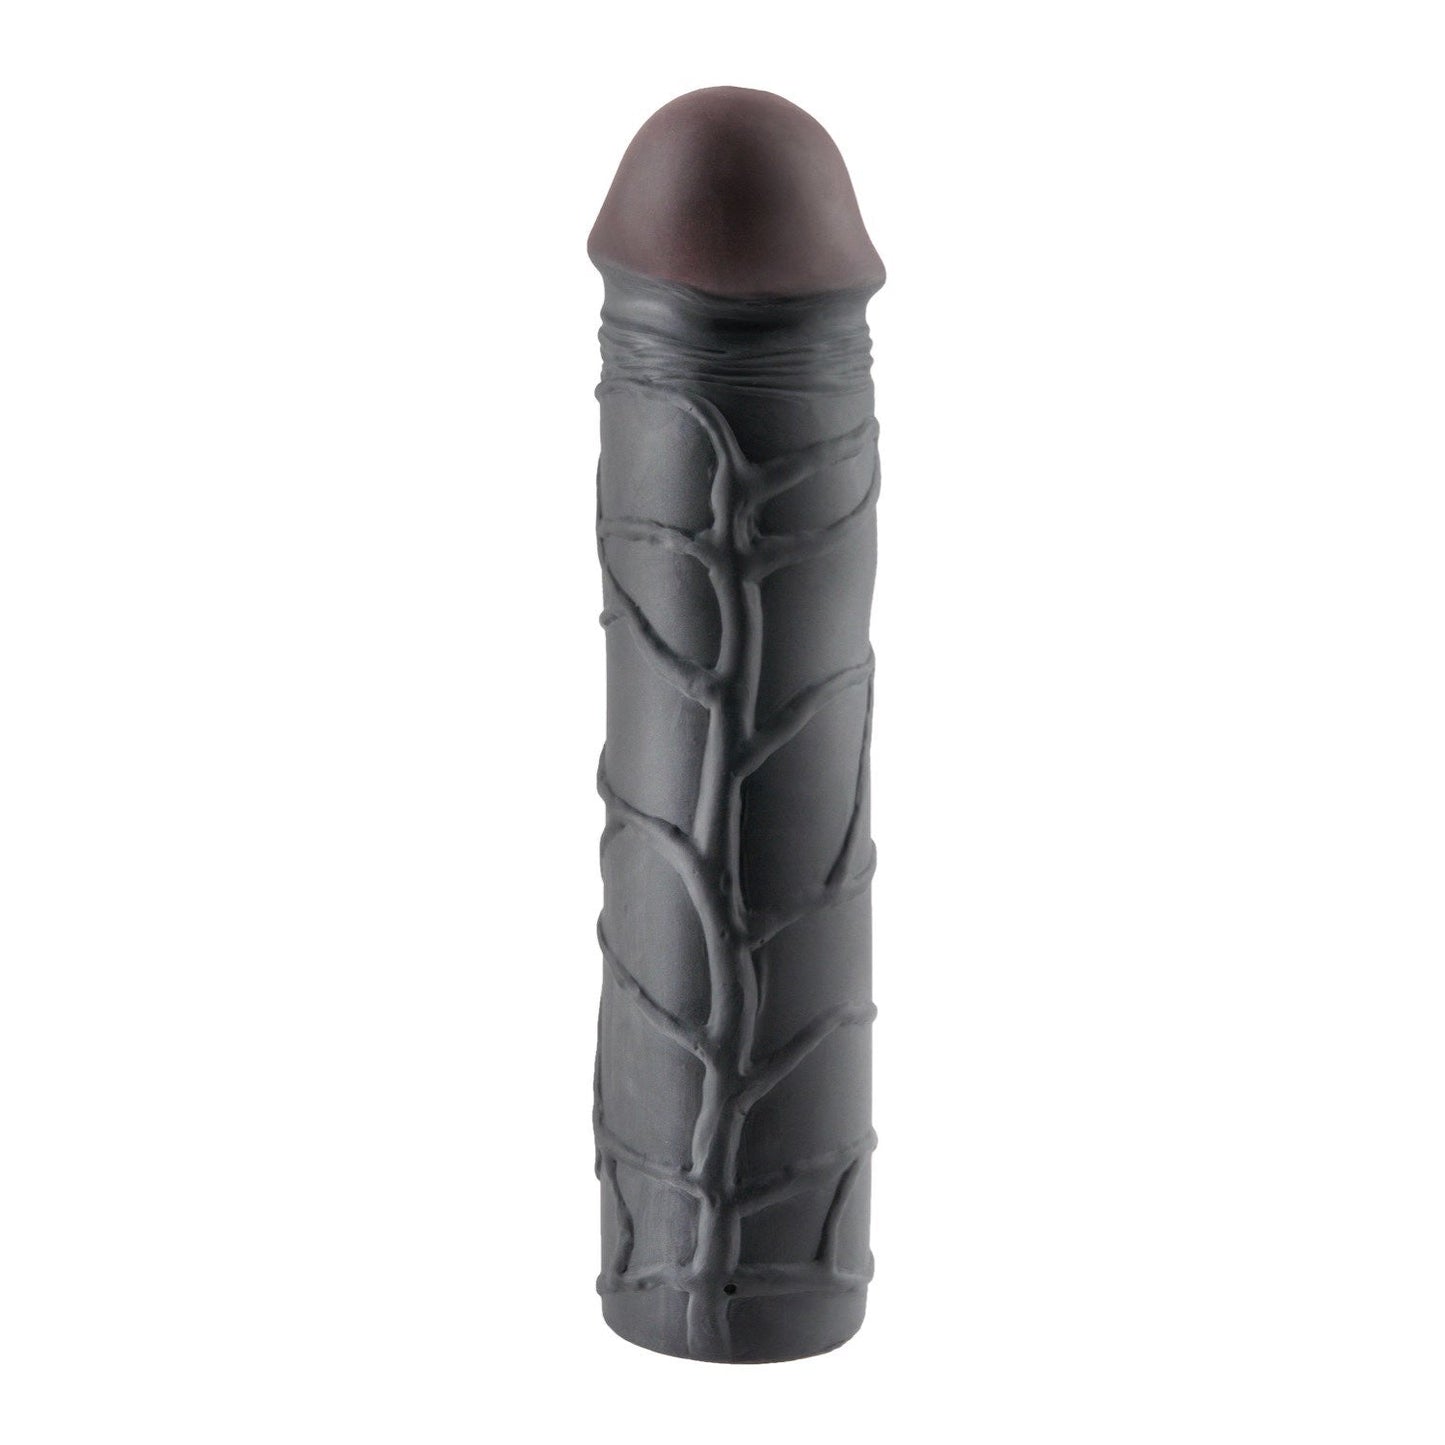 Mega 3" Extension - Black Penis Extension Sleeve